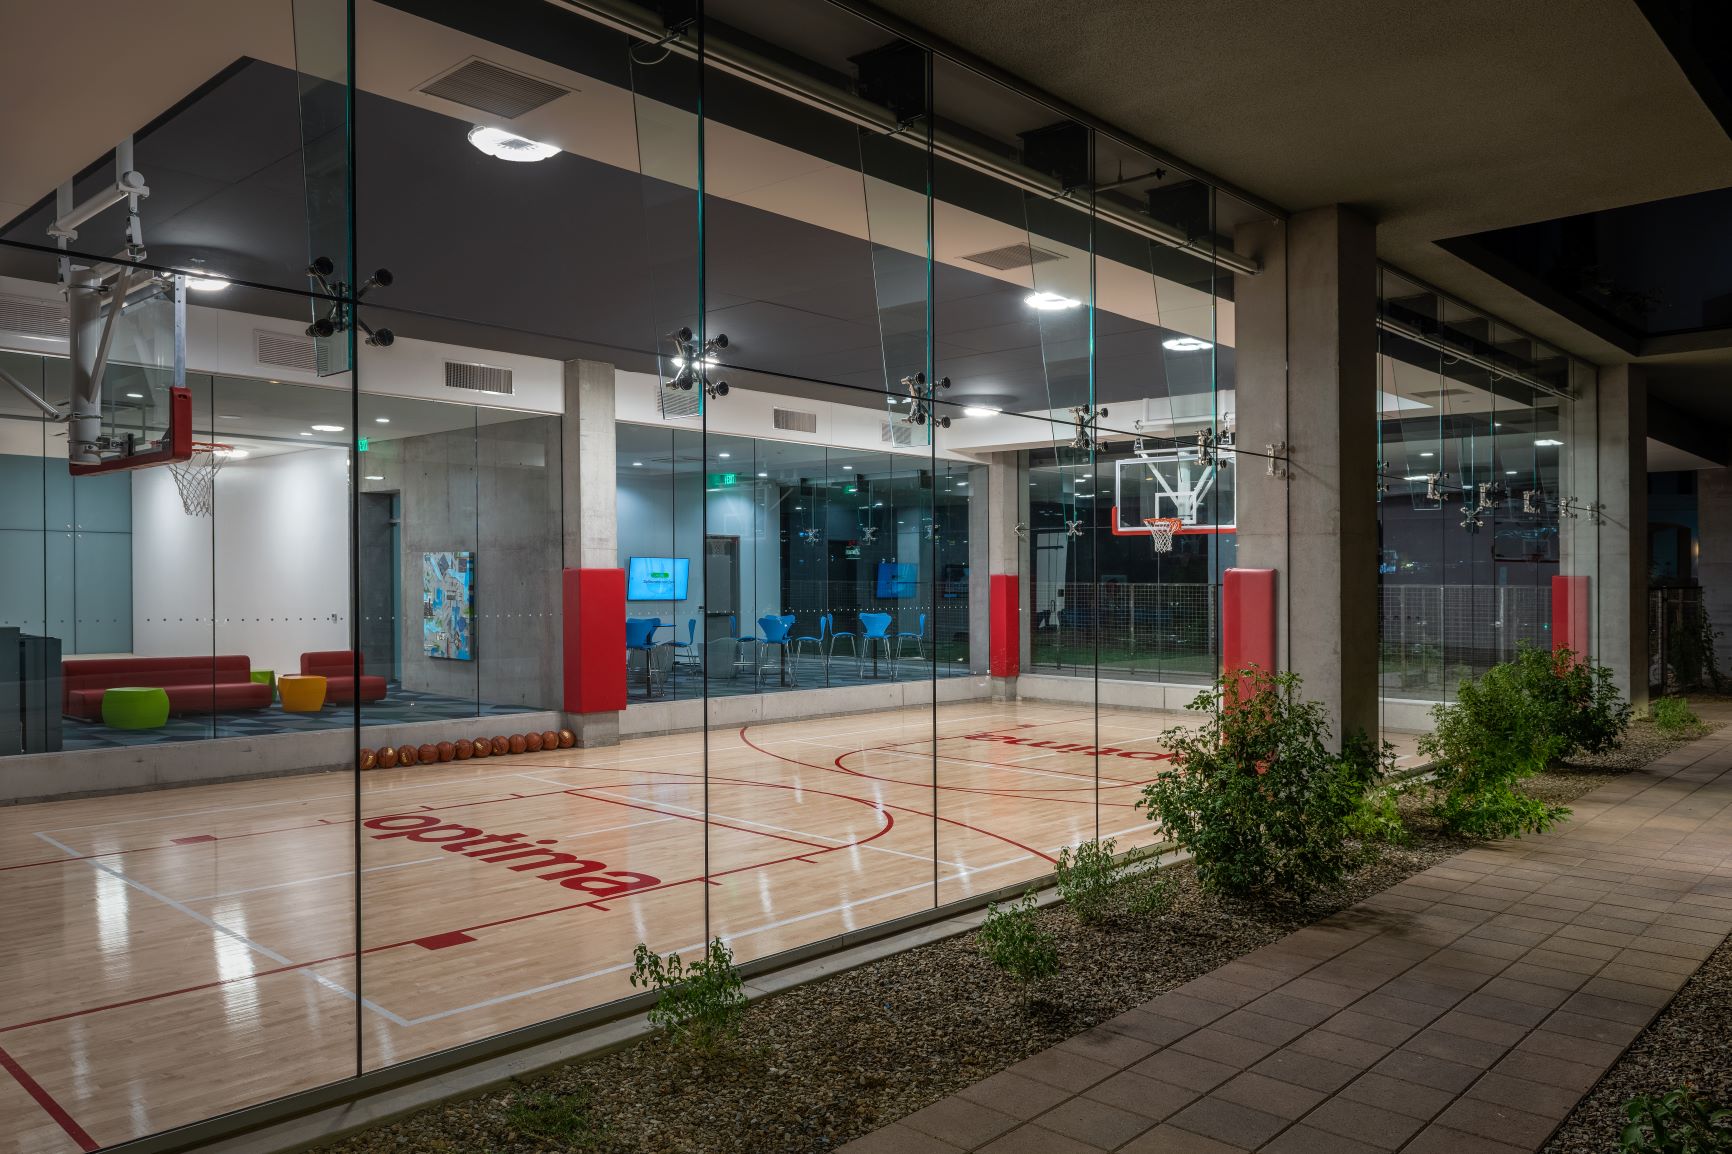 indoor basketball court house rental